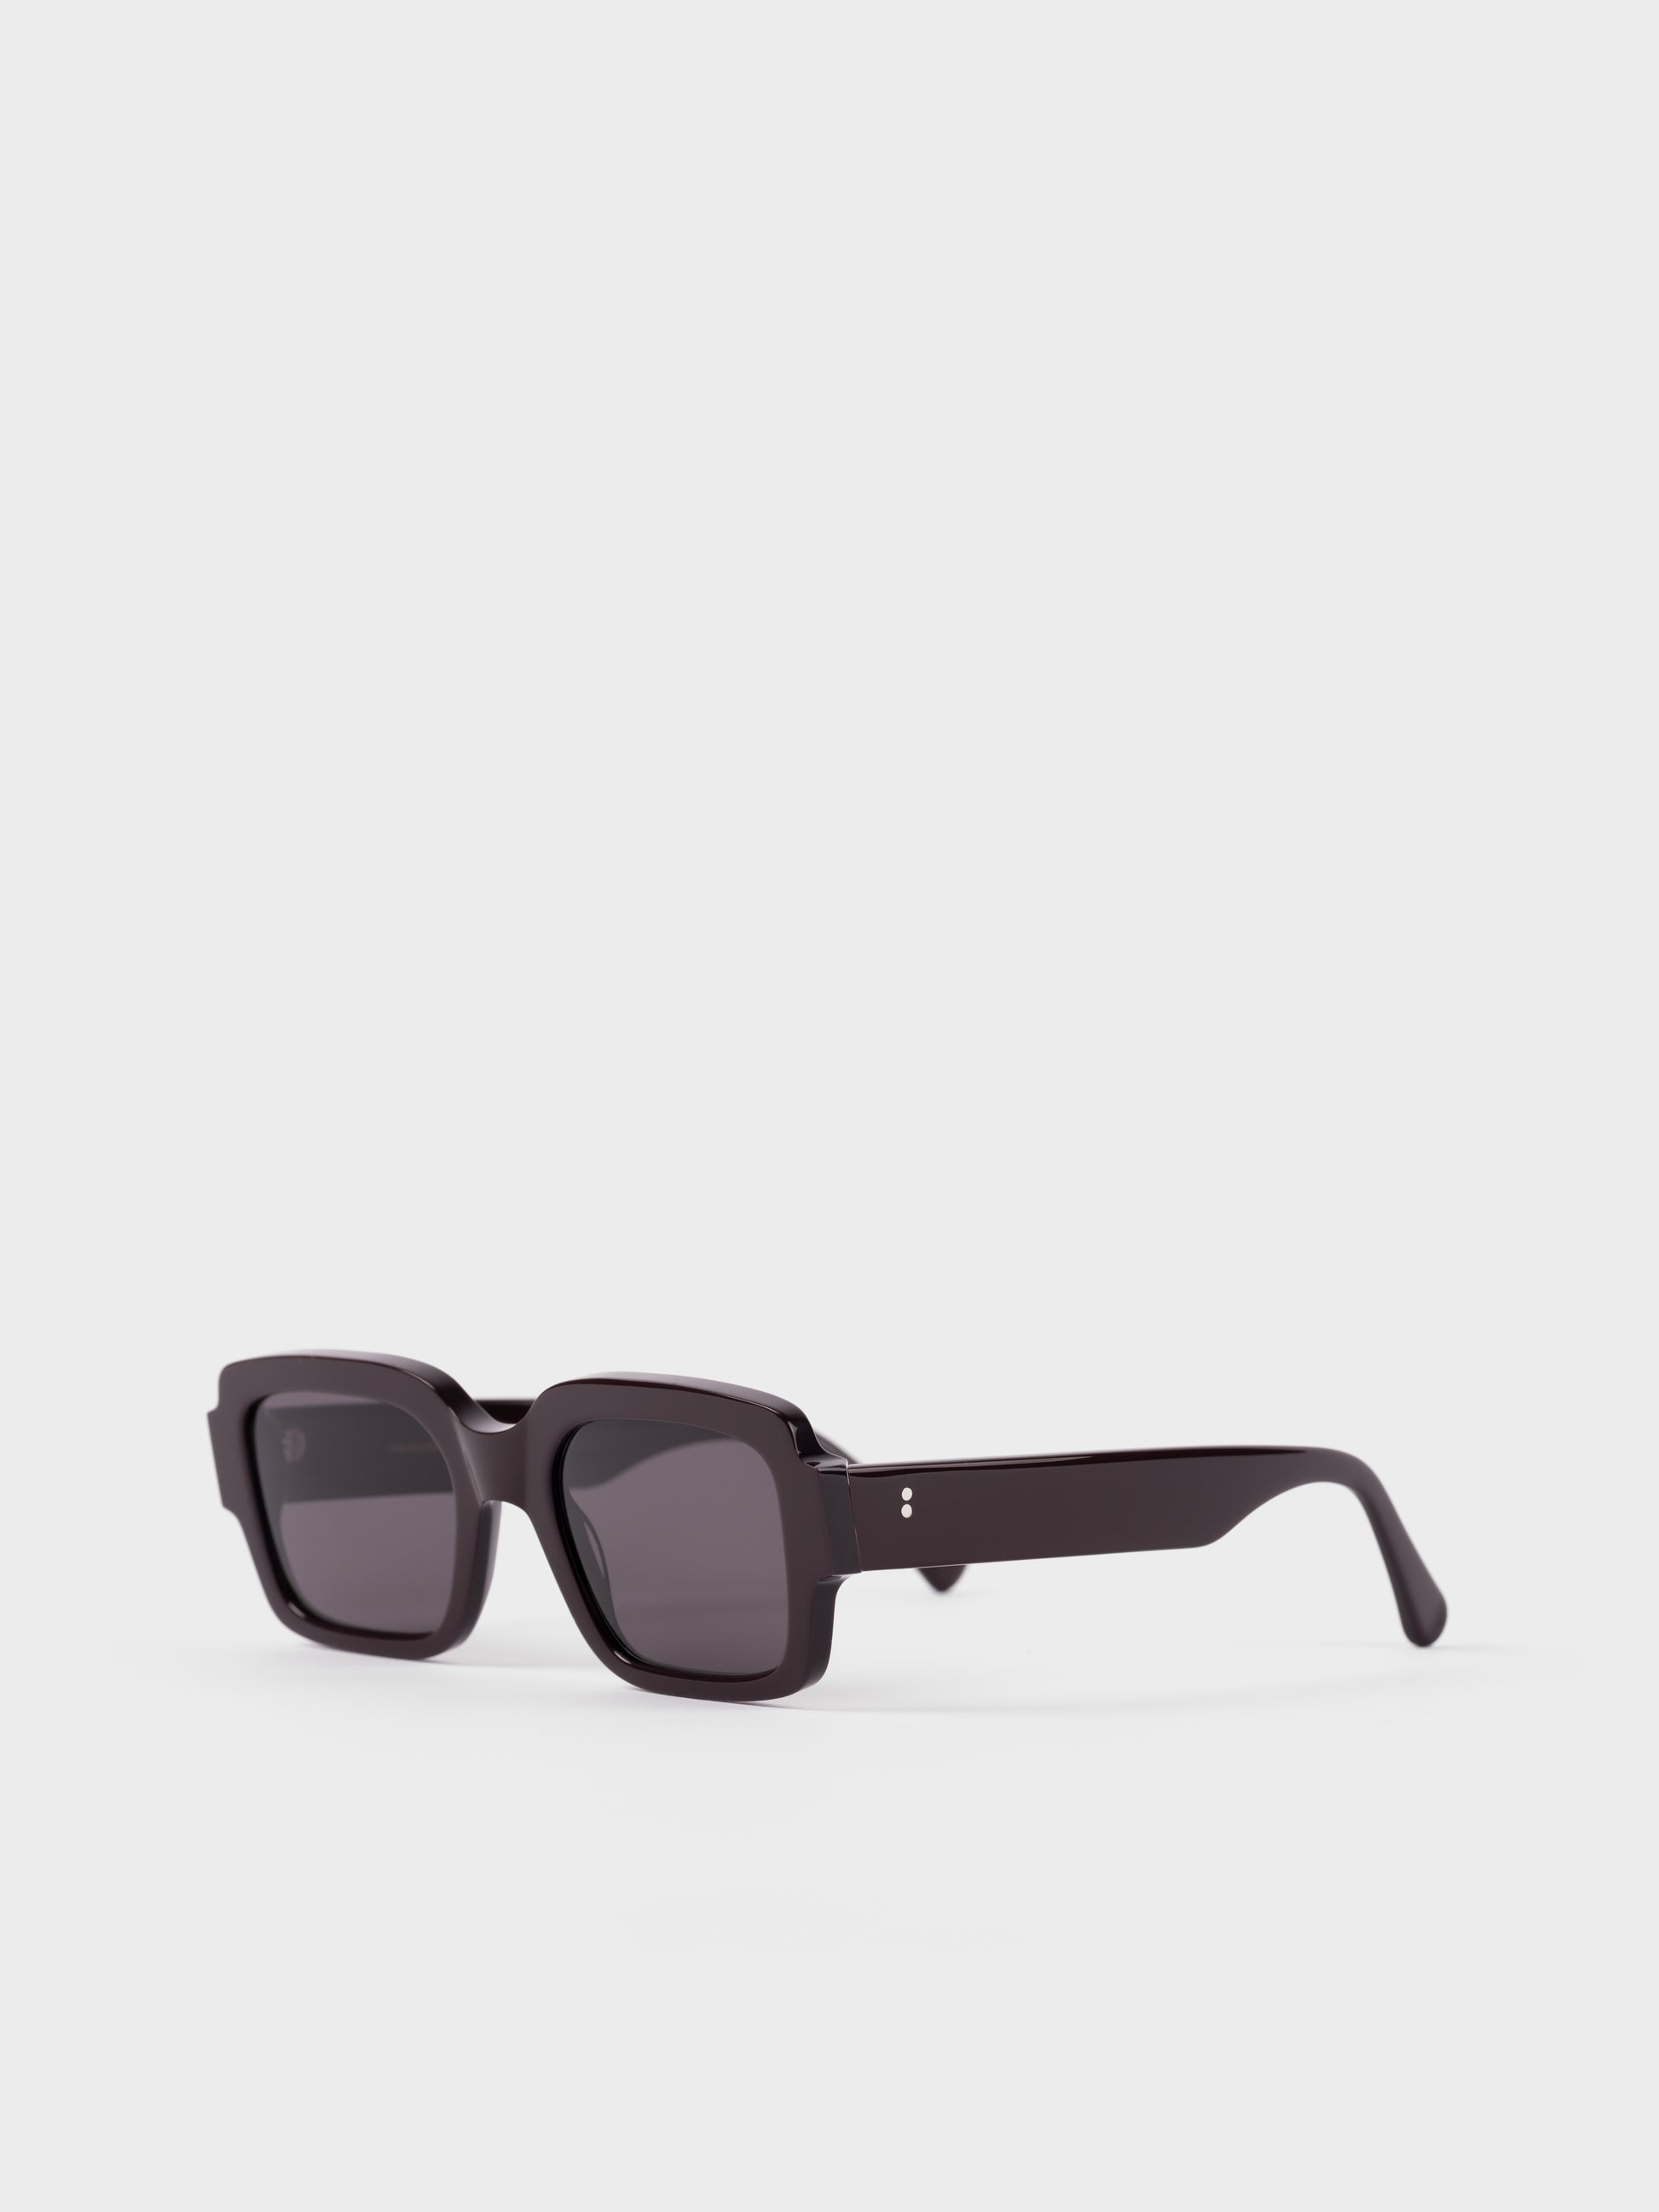 Monokel Sunglasses - Apollo Chocolate/Grey Lens